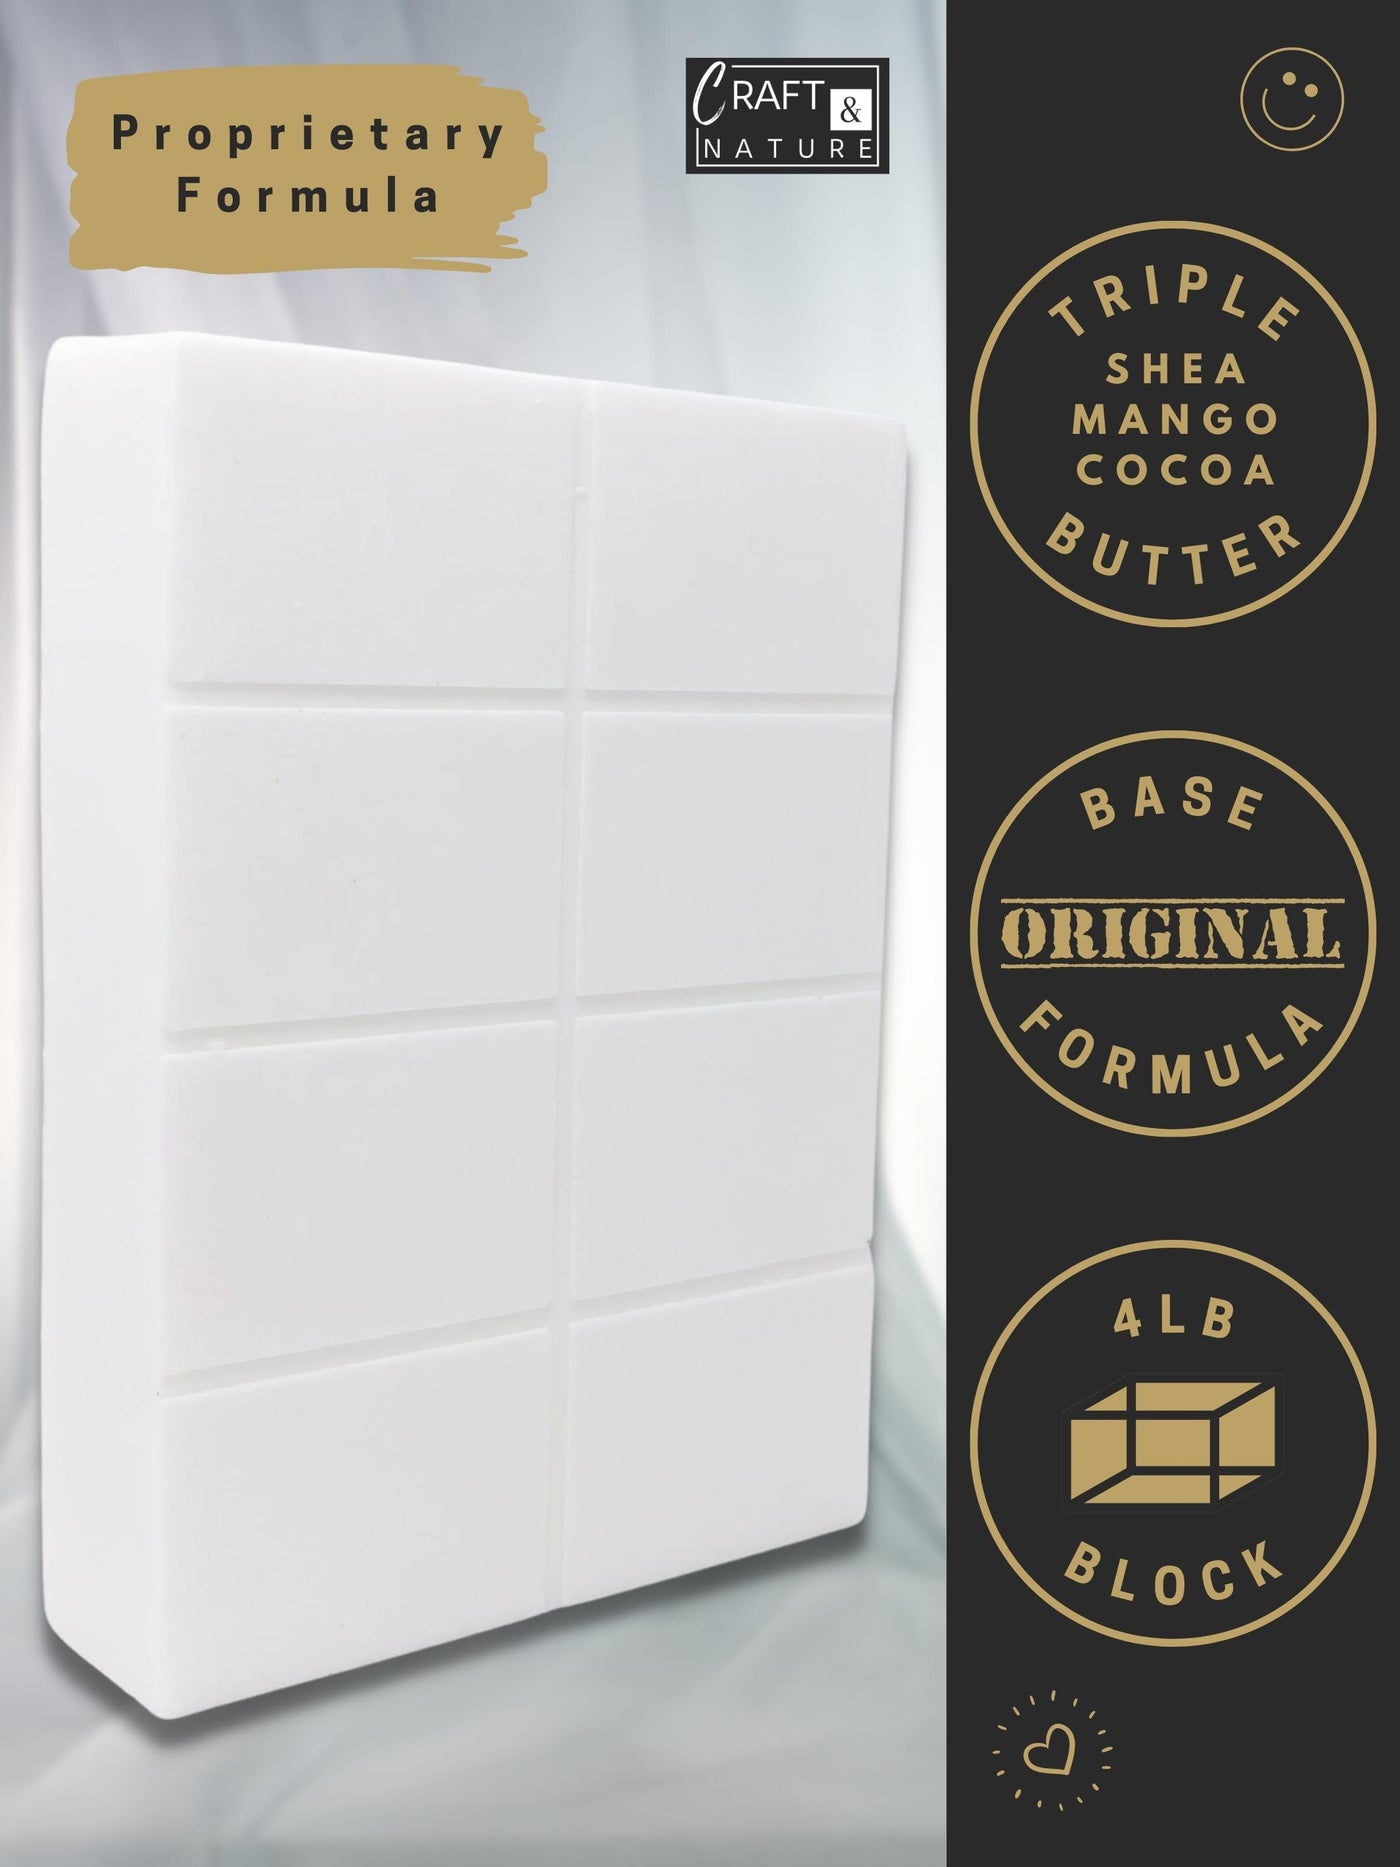 Original Soap Base - Triple Butter